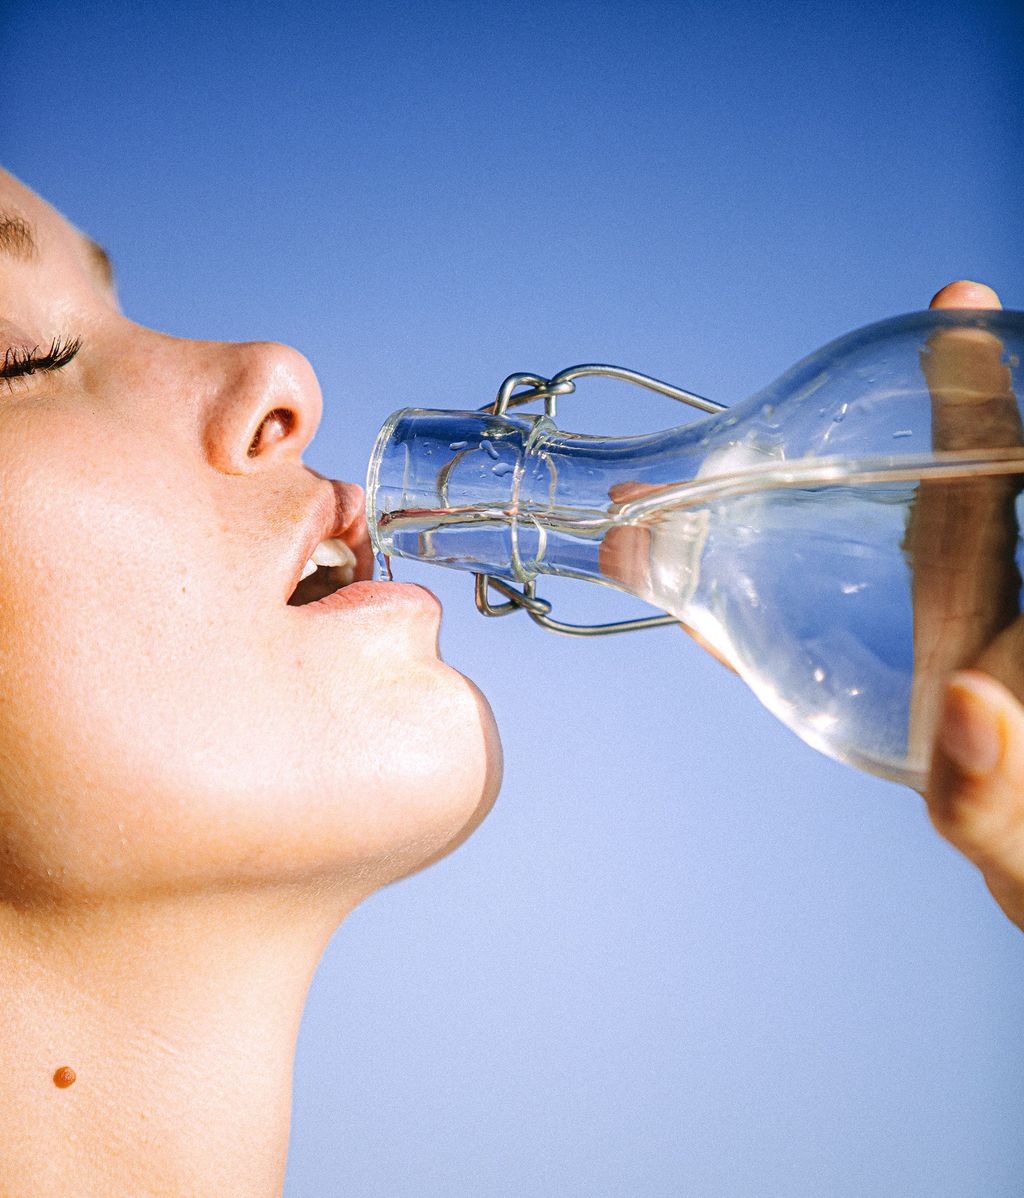 Haz del agua tu bebida favorita. FUENTE: Pexels